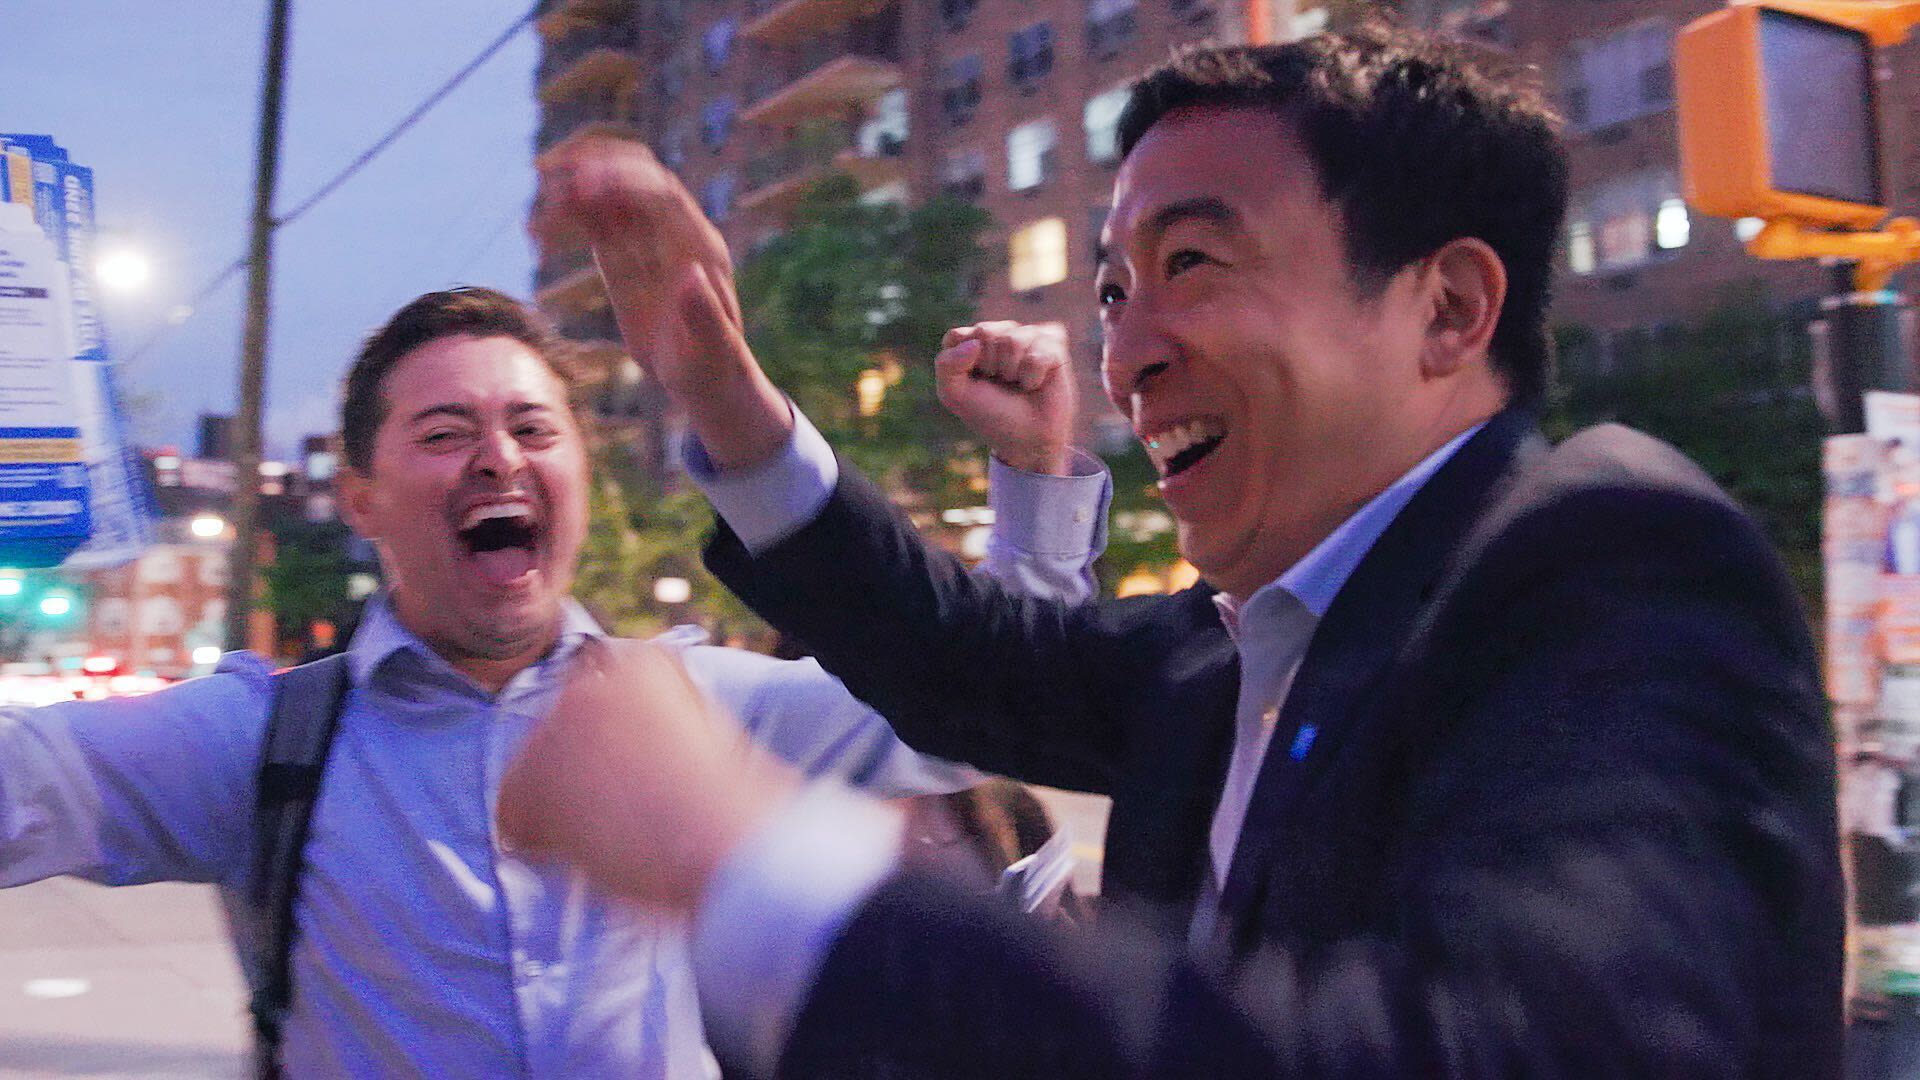 www.newyorker.com: “The Andrew Yang Show”: Inside a Doomed Run for Mayor